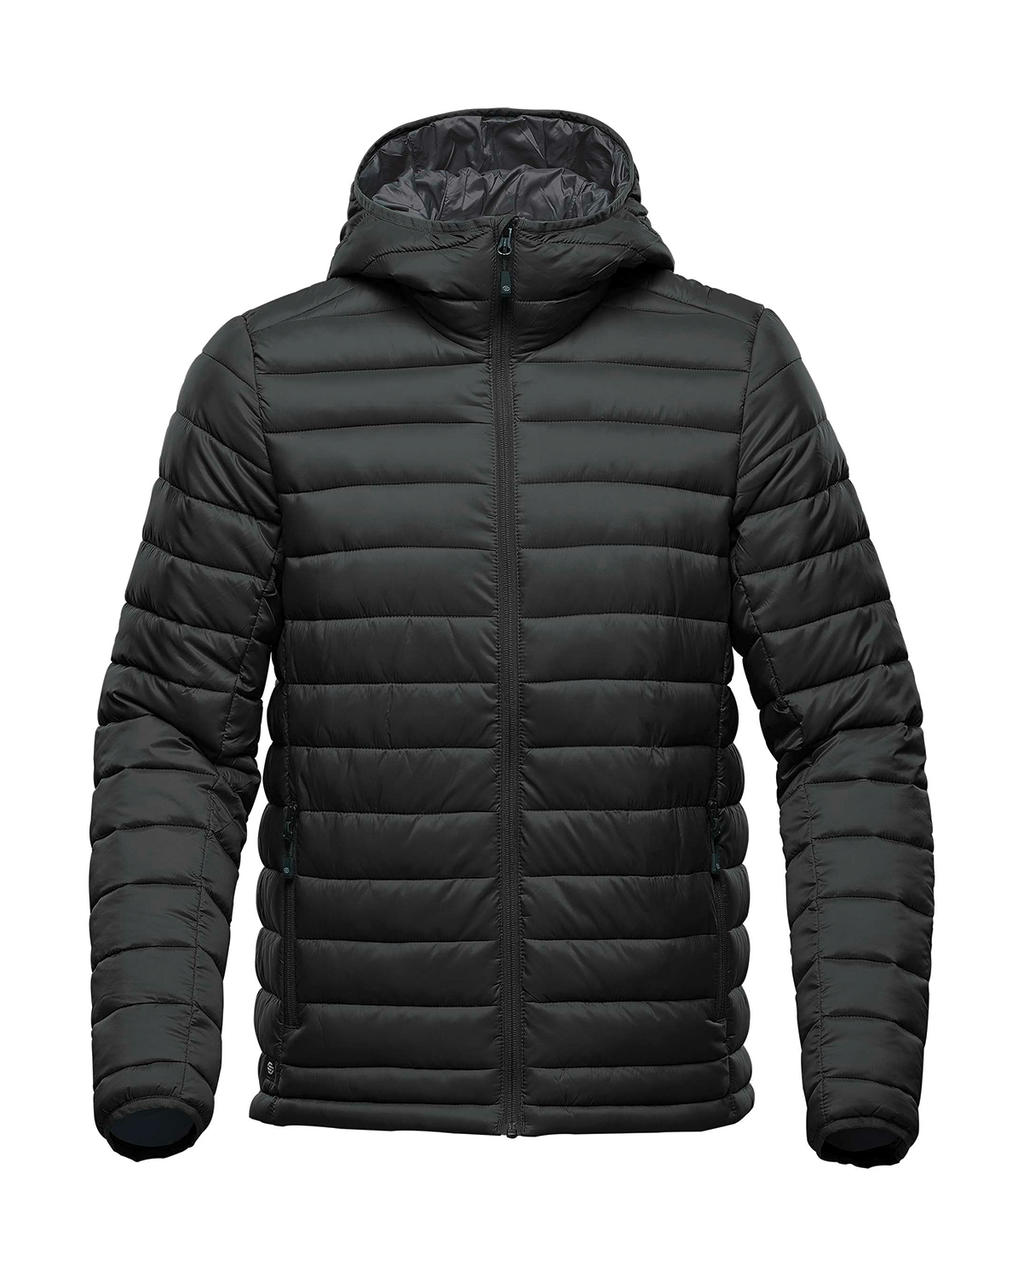  Mens Stavanger Thermal Jacket in Farbe Black/Graphite